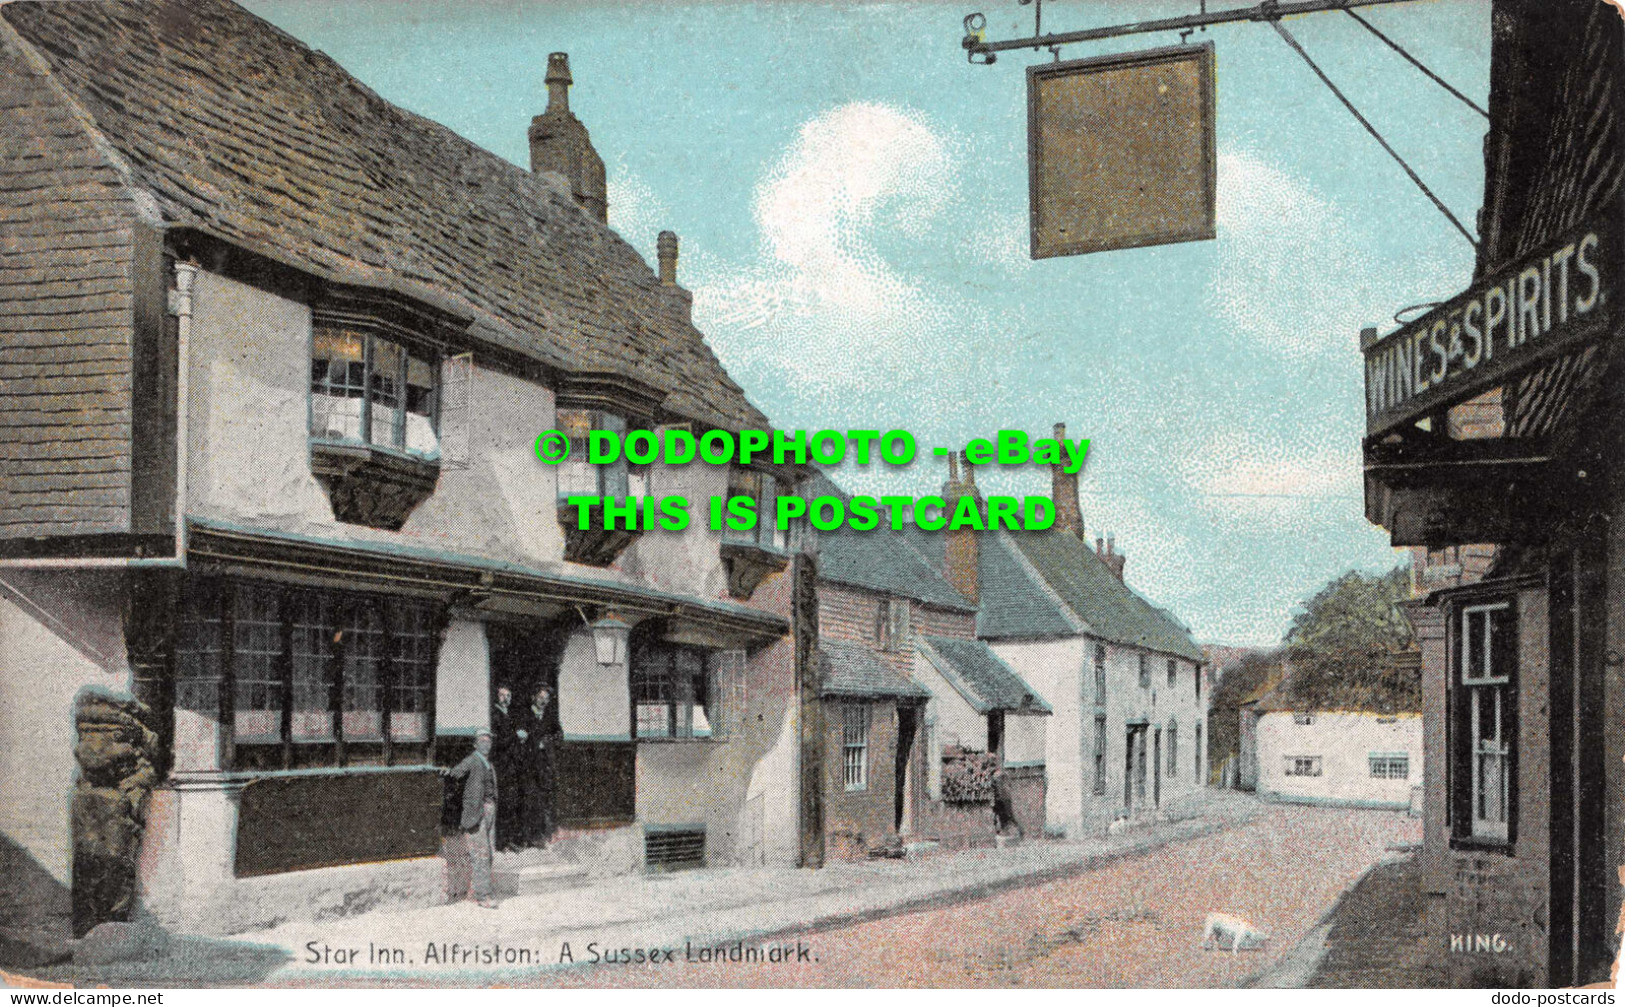 R548892 Star Inn. Alfriston. A Sussex Landmark. Shureys Publications. Delittle. - Welt